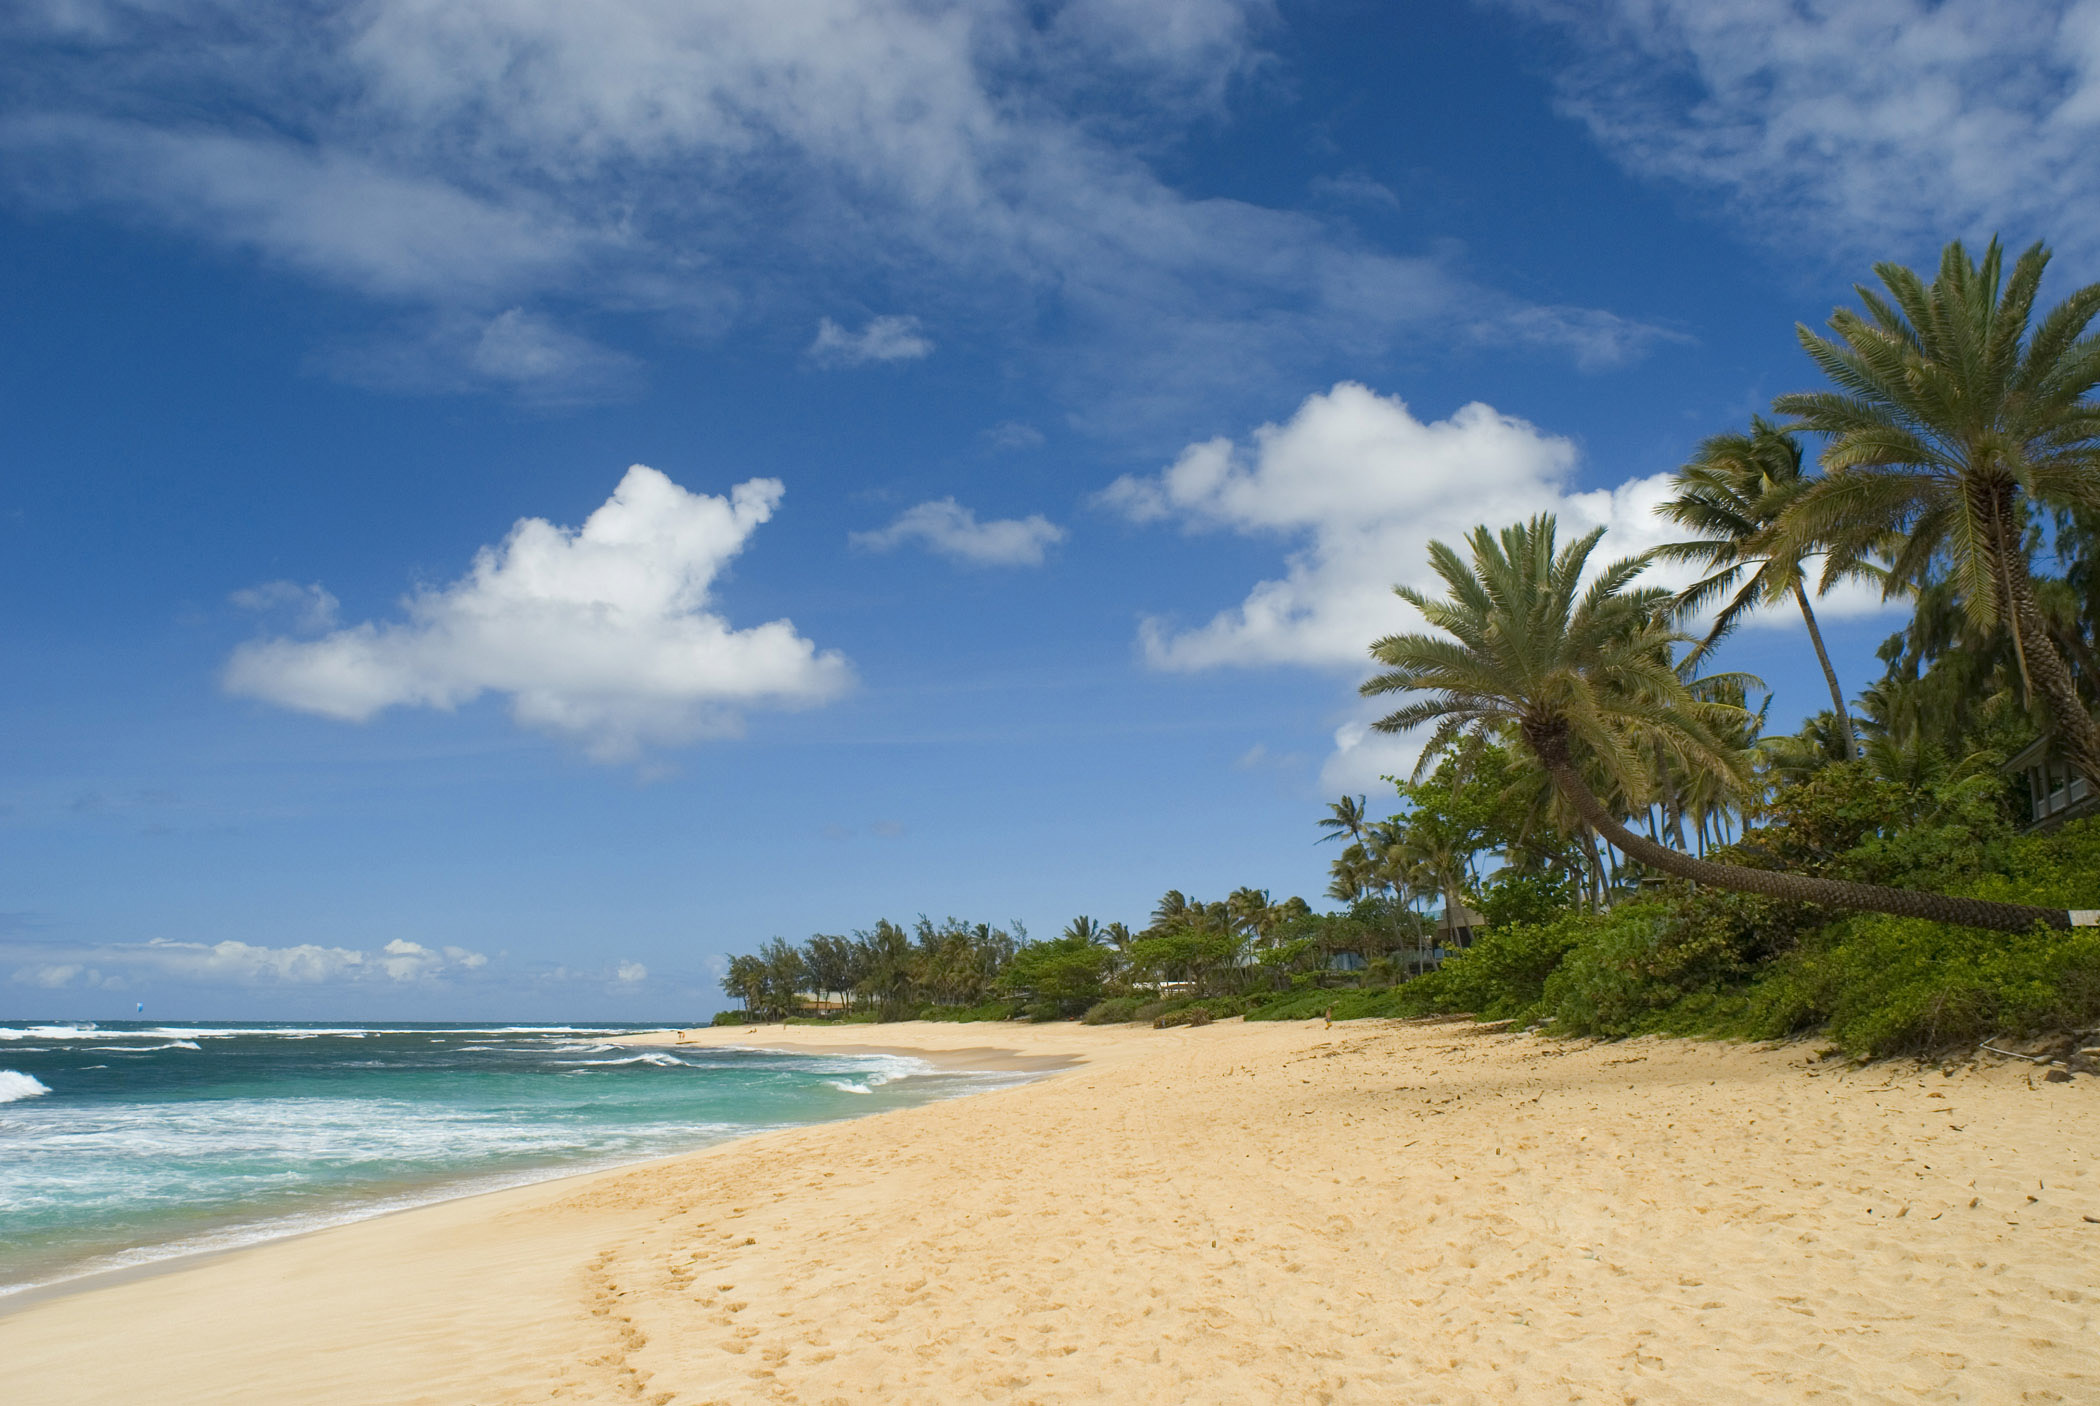 Free Stock photo of Deserted Sunset Beach in Hawaii | Photoeverywhere